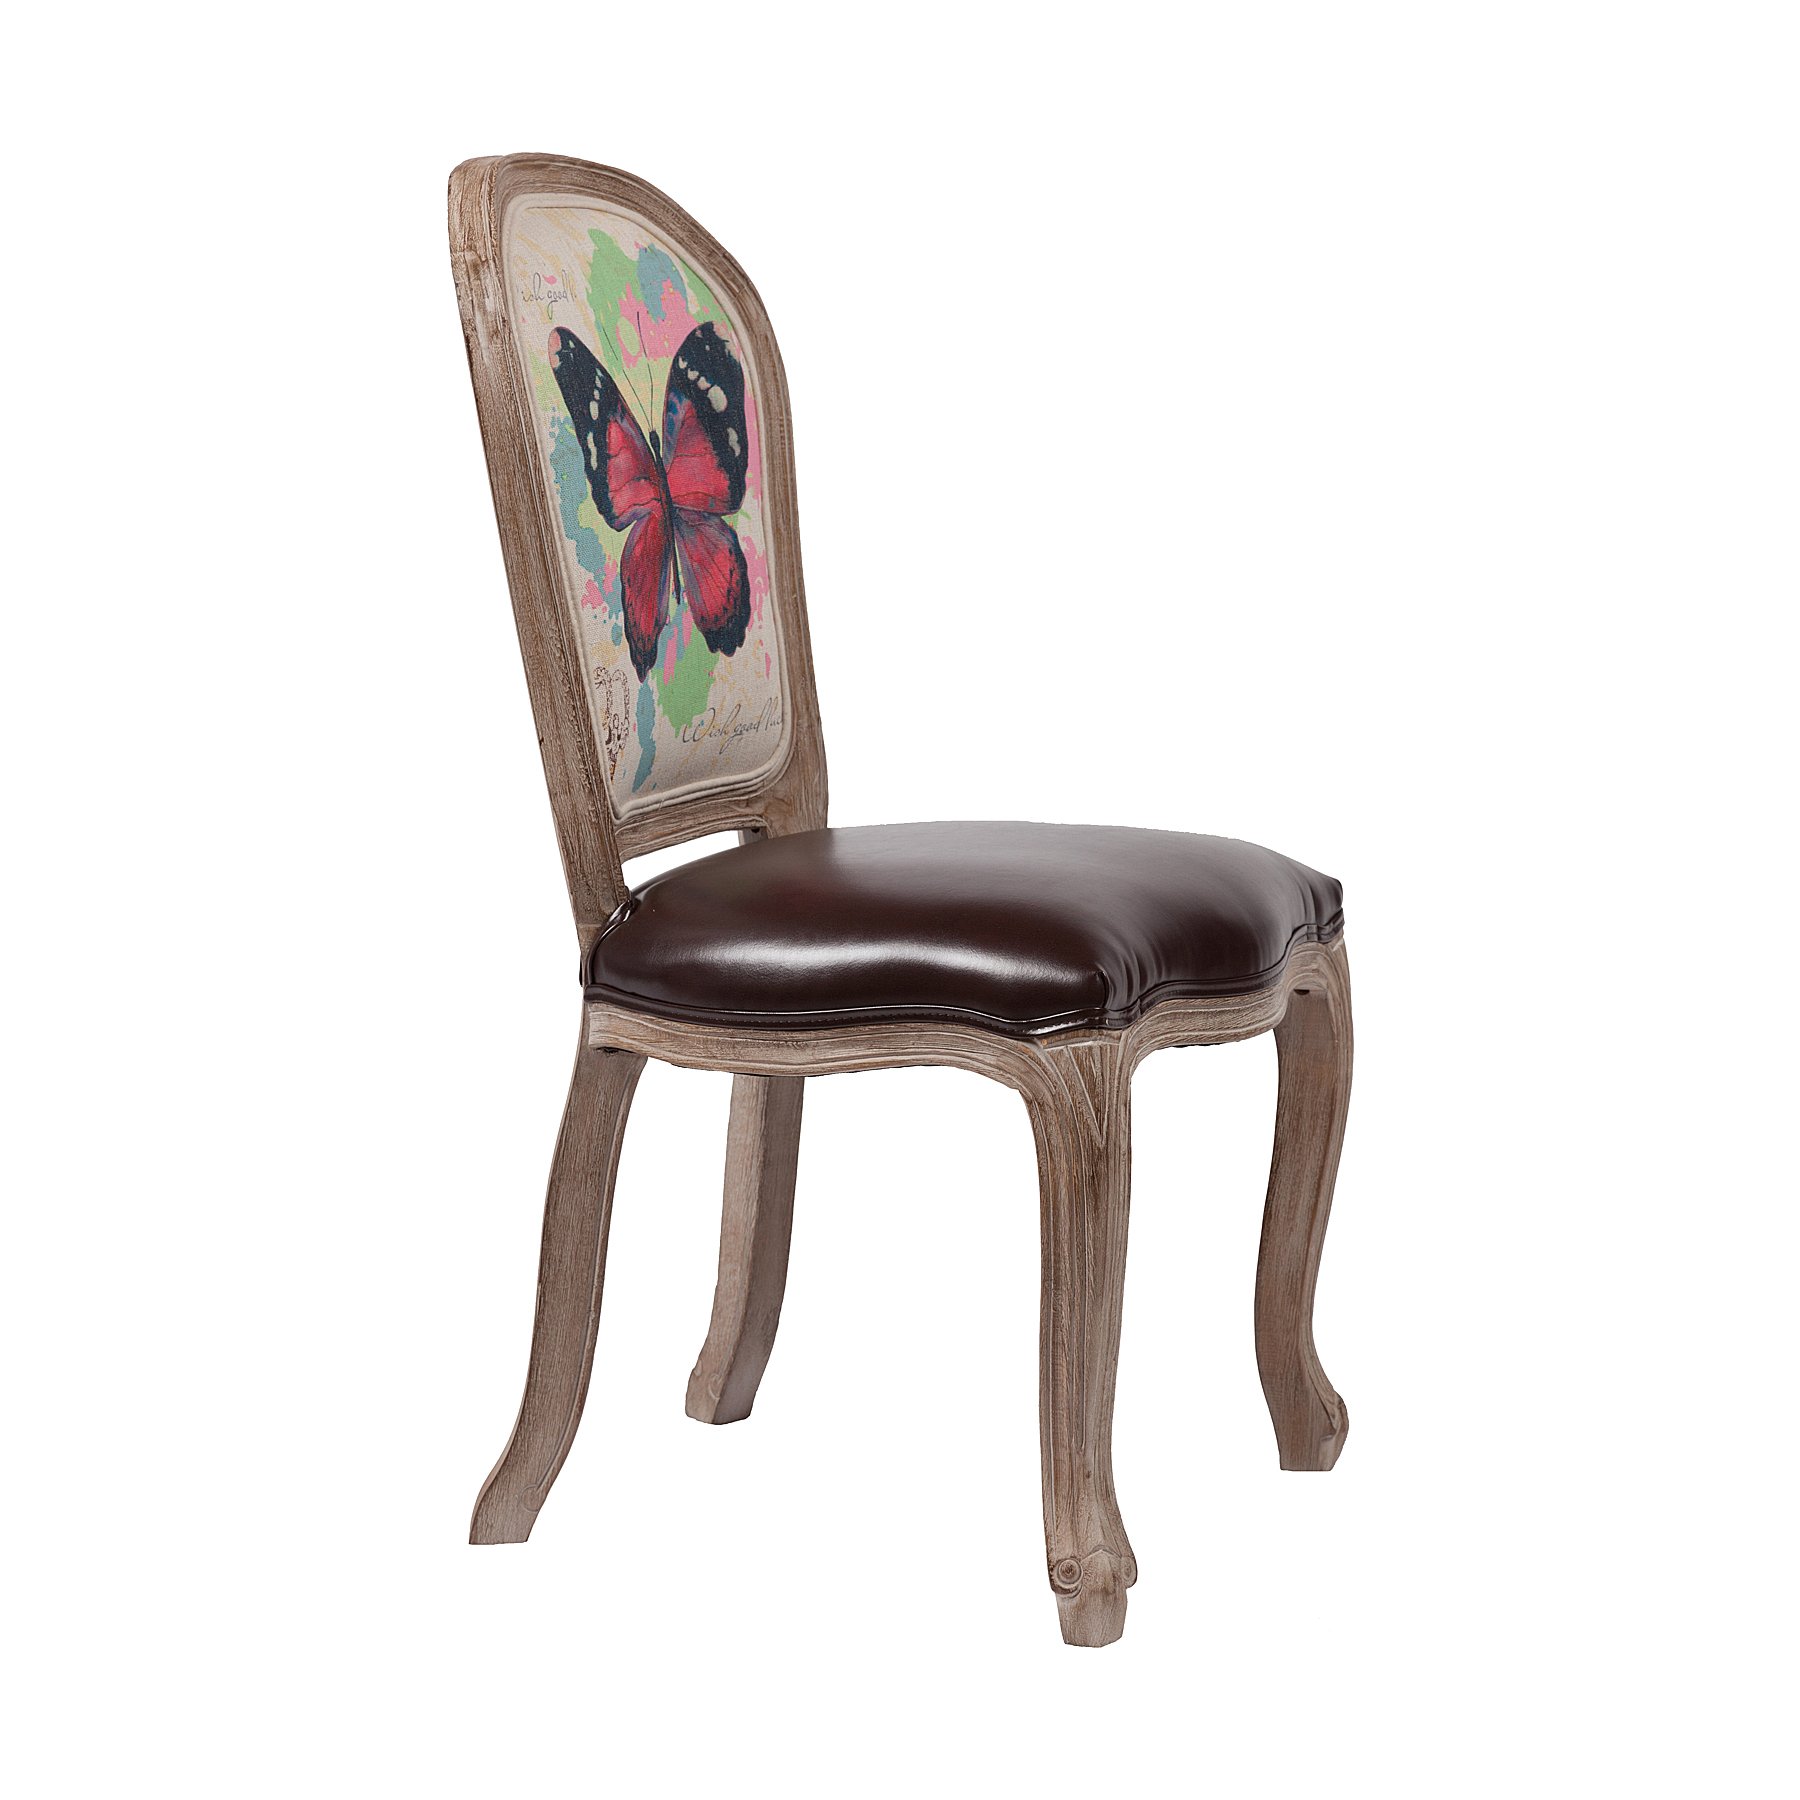 стул с коричневой обивкой